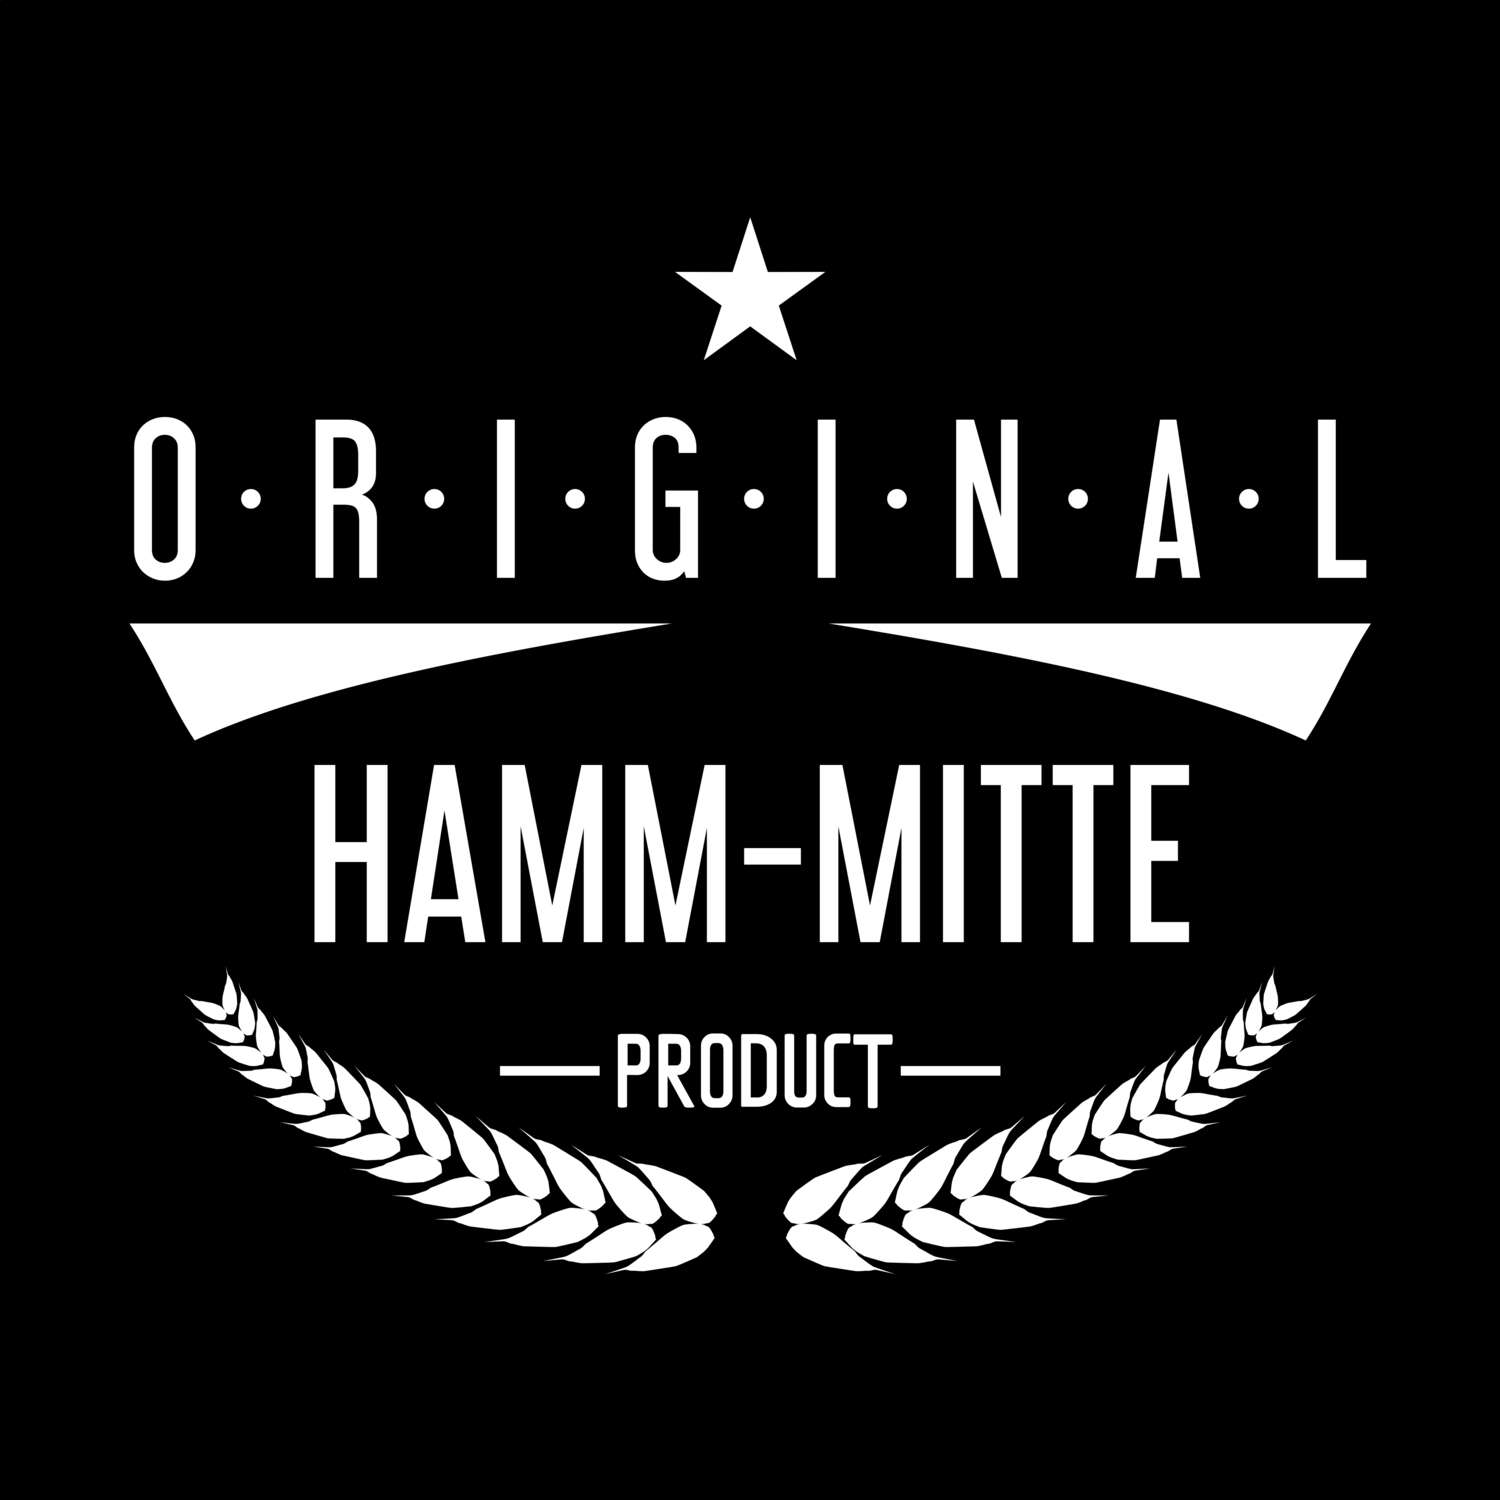 Hamm-Mitte T-Shirt »Original Product«